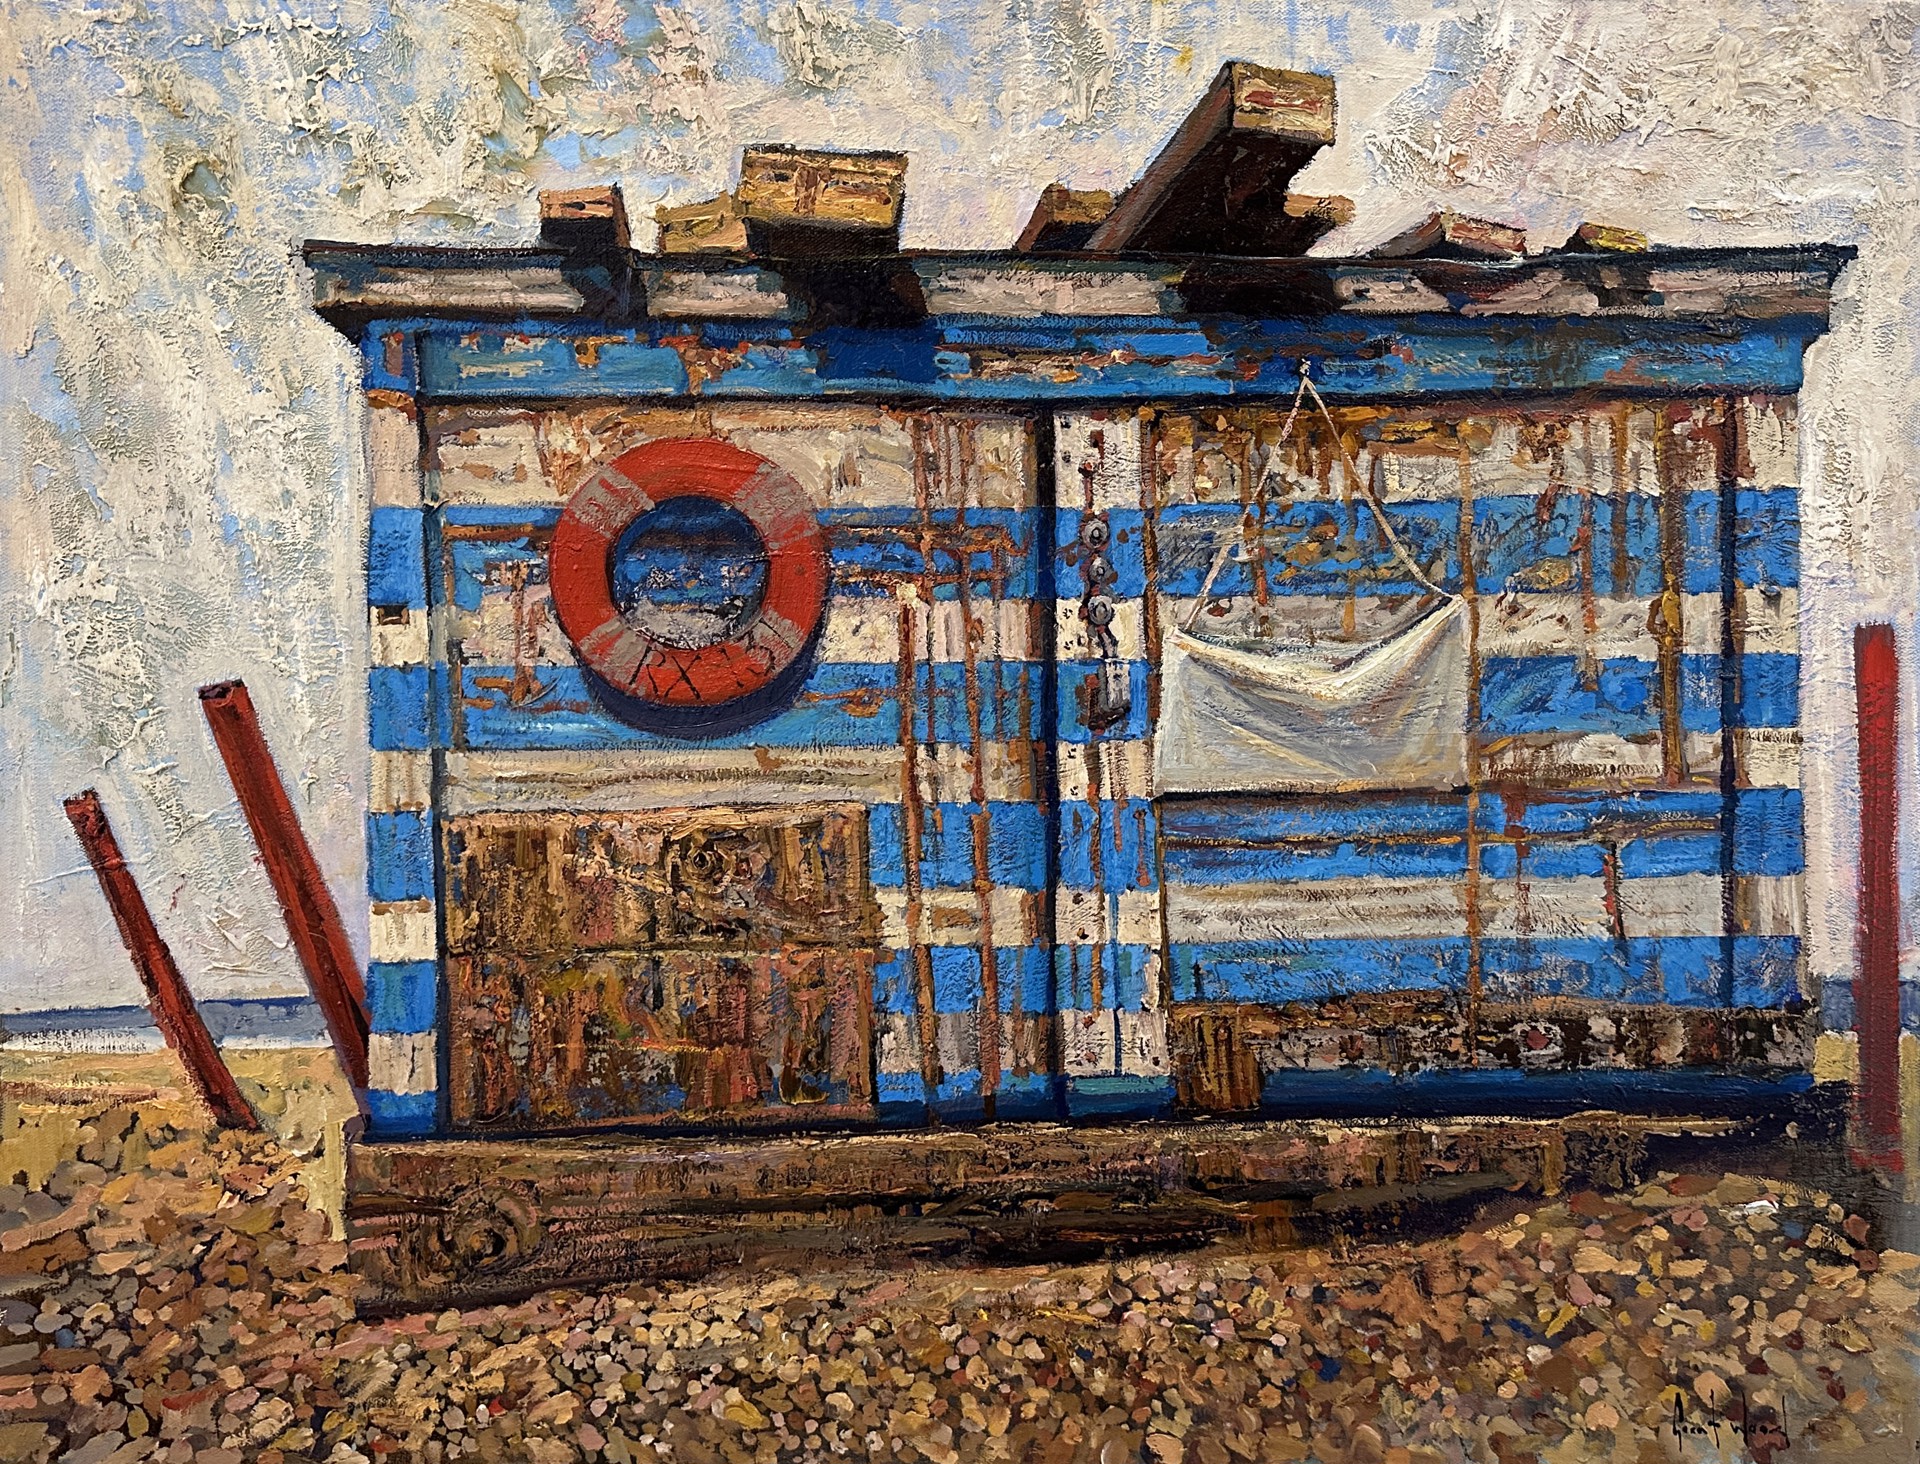 Blue Hut by Grant E. Wood